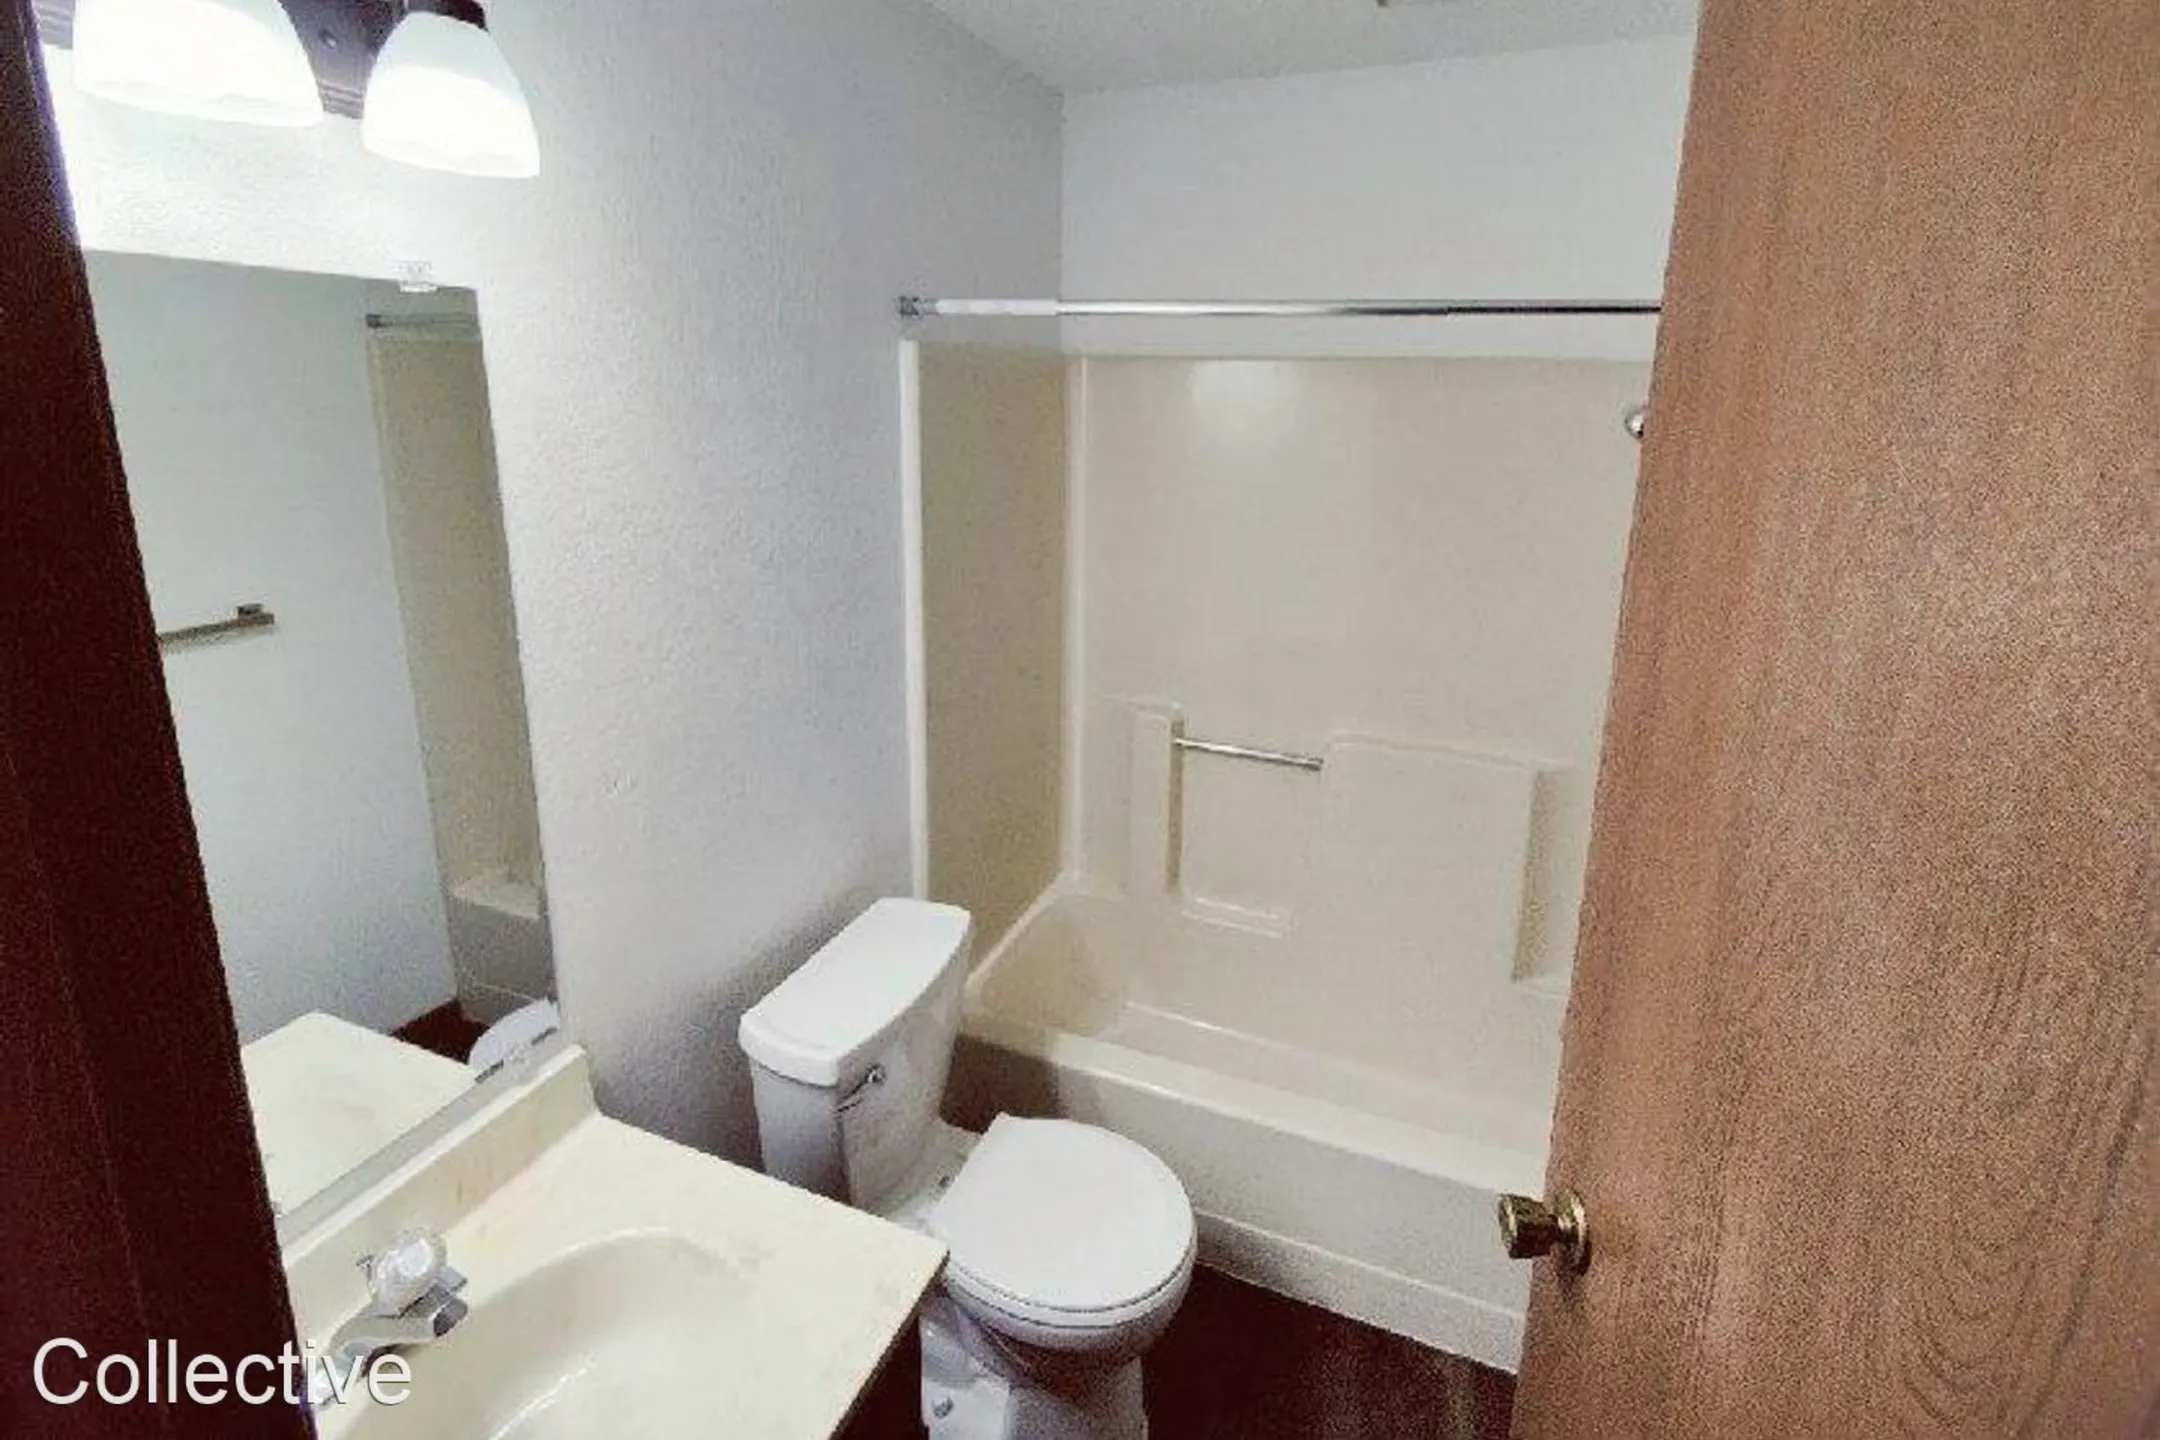 Bathroom - Kirkwood Park Apartments - Bismarck, ND